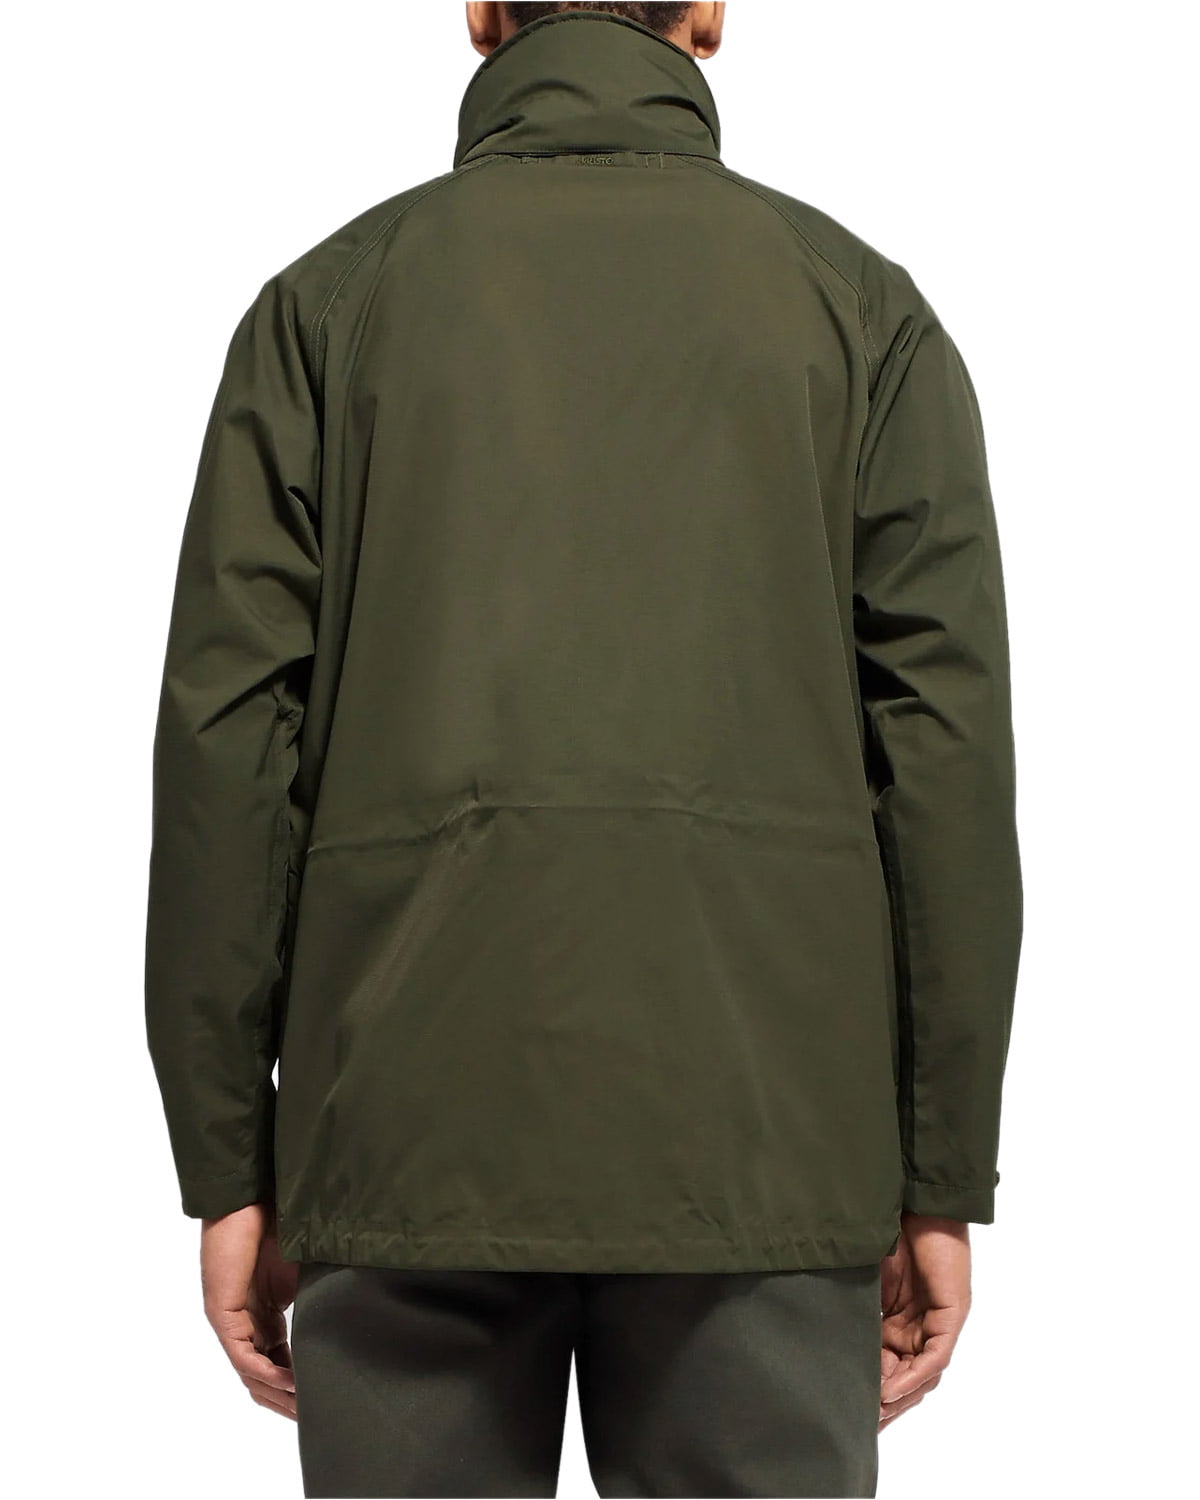 all sizes dark new Mens Musto Fenland Packaway Jacket moss CS1830 